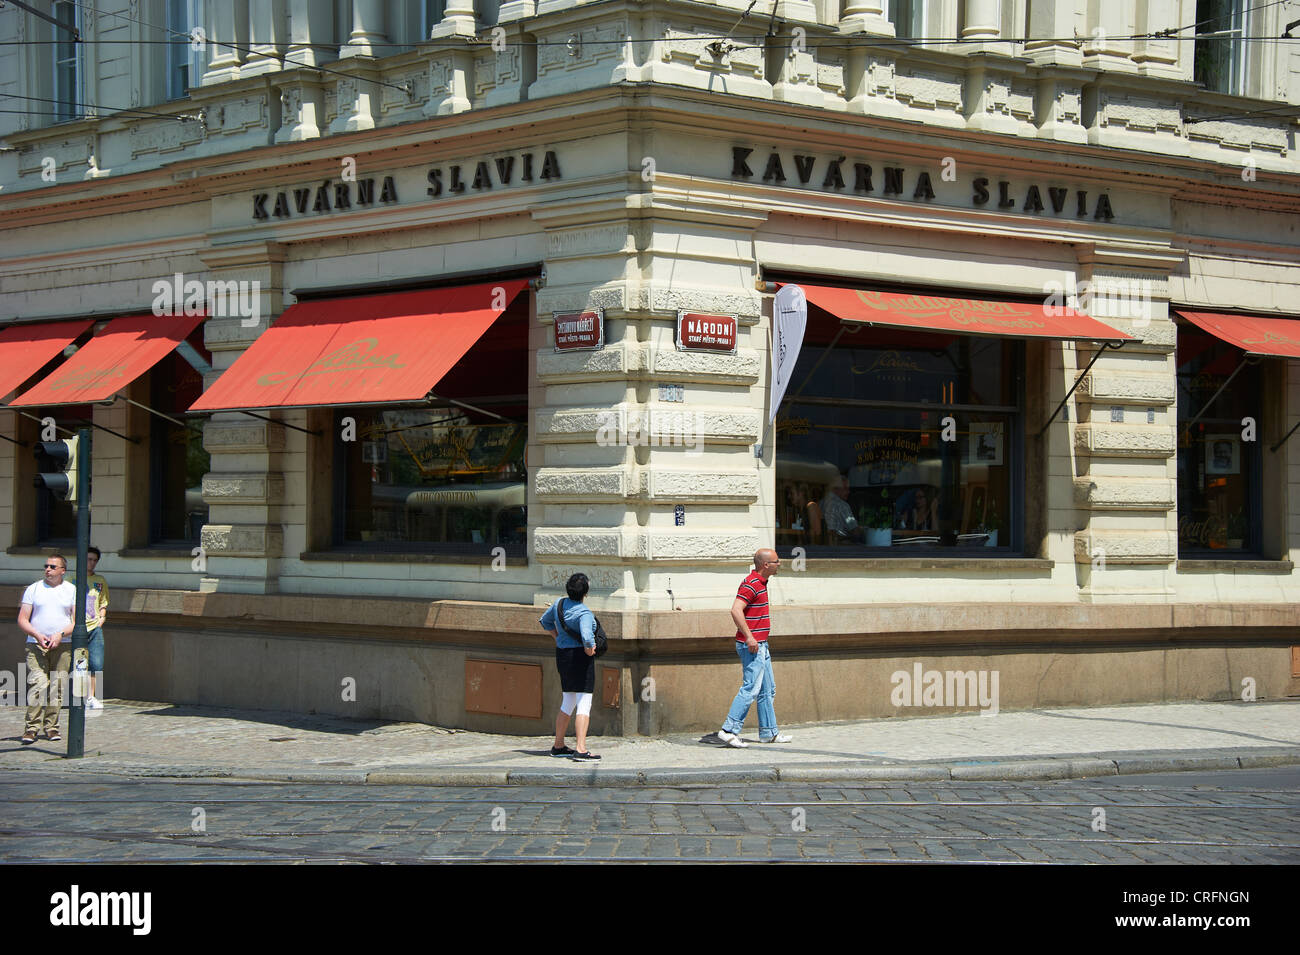 Cafe Kavarna Slavia Prague Czech Republic Stock Photo